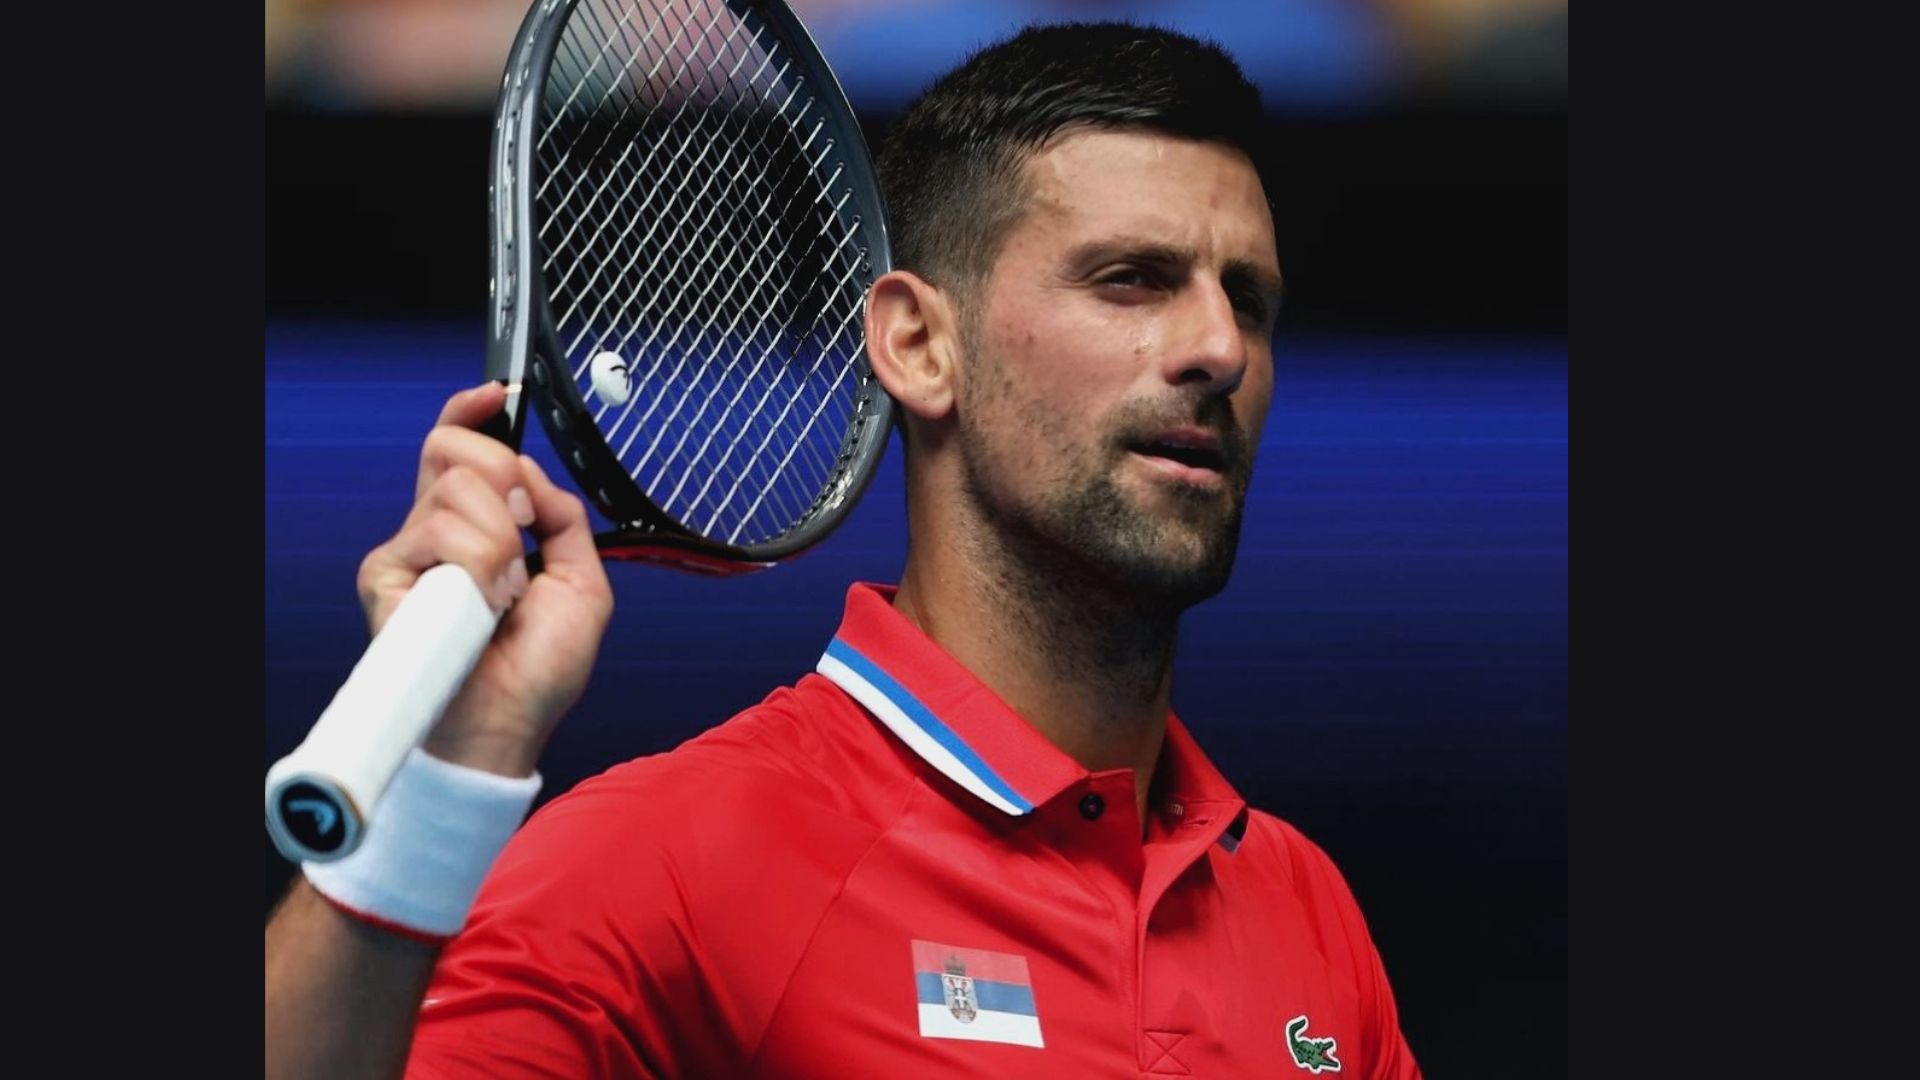 “I’ll be okay”: Novak Djokovic plays down injury concerns ahead of Australian Open